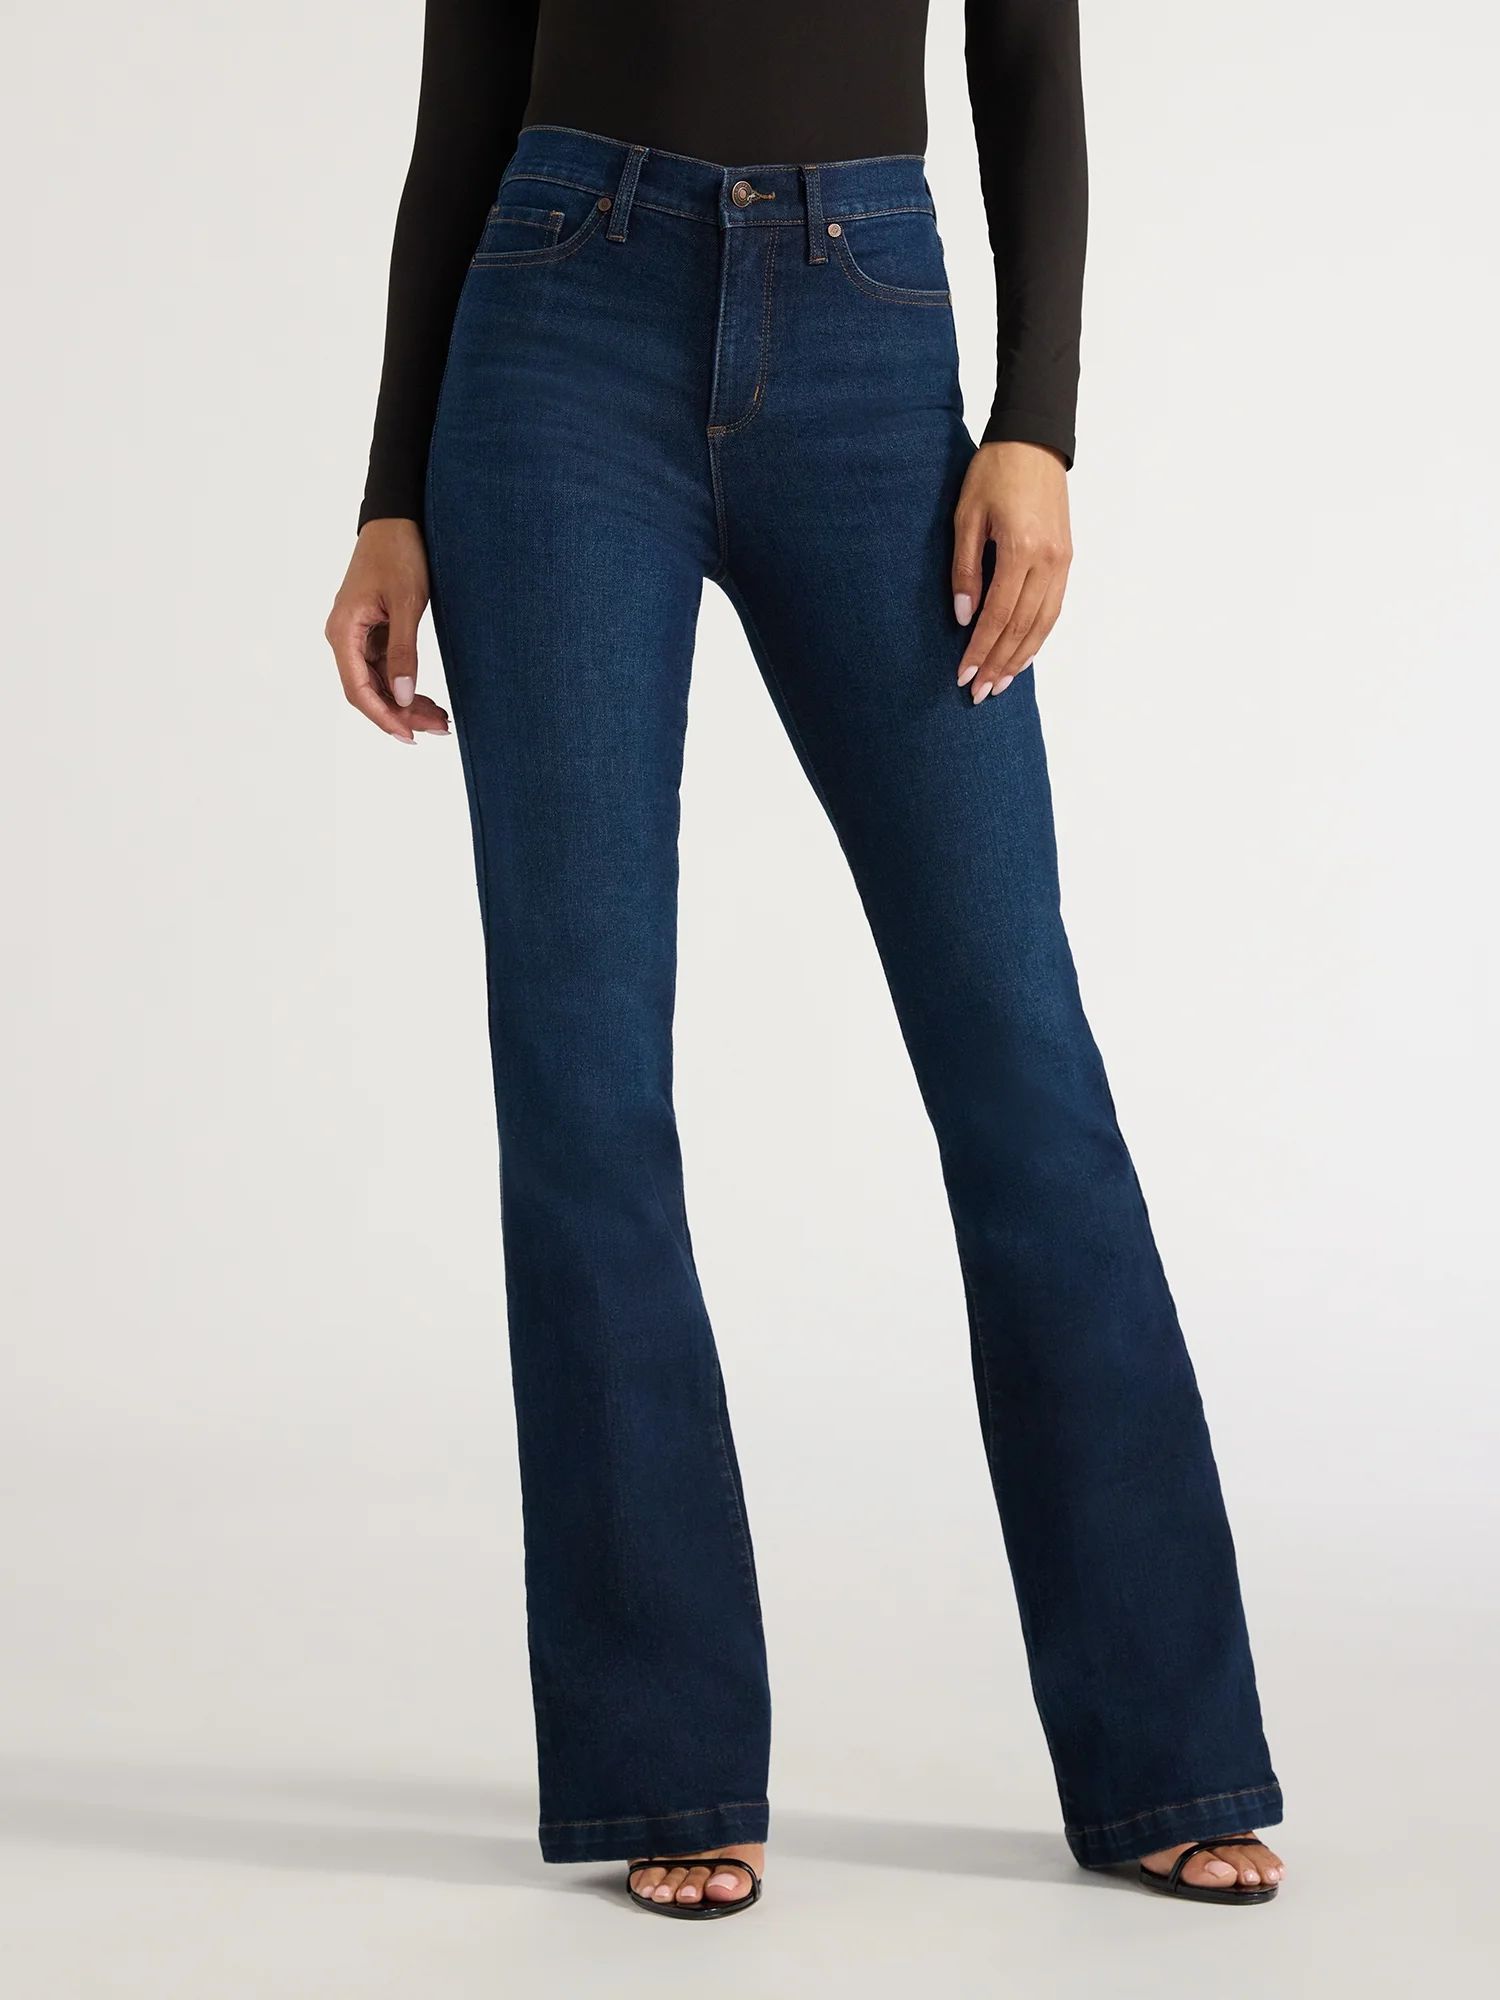 Sofia Jeans Women's Melisa Flare High Rise Jeans, 33.5" Inseam, Sizes 0-20 | Walmart (US)